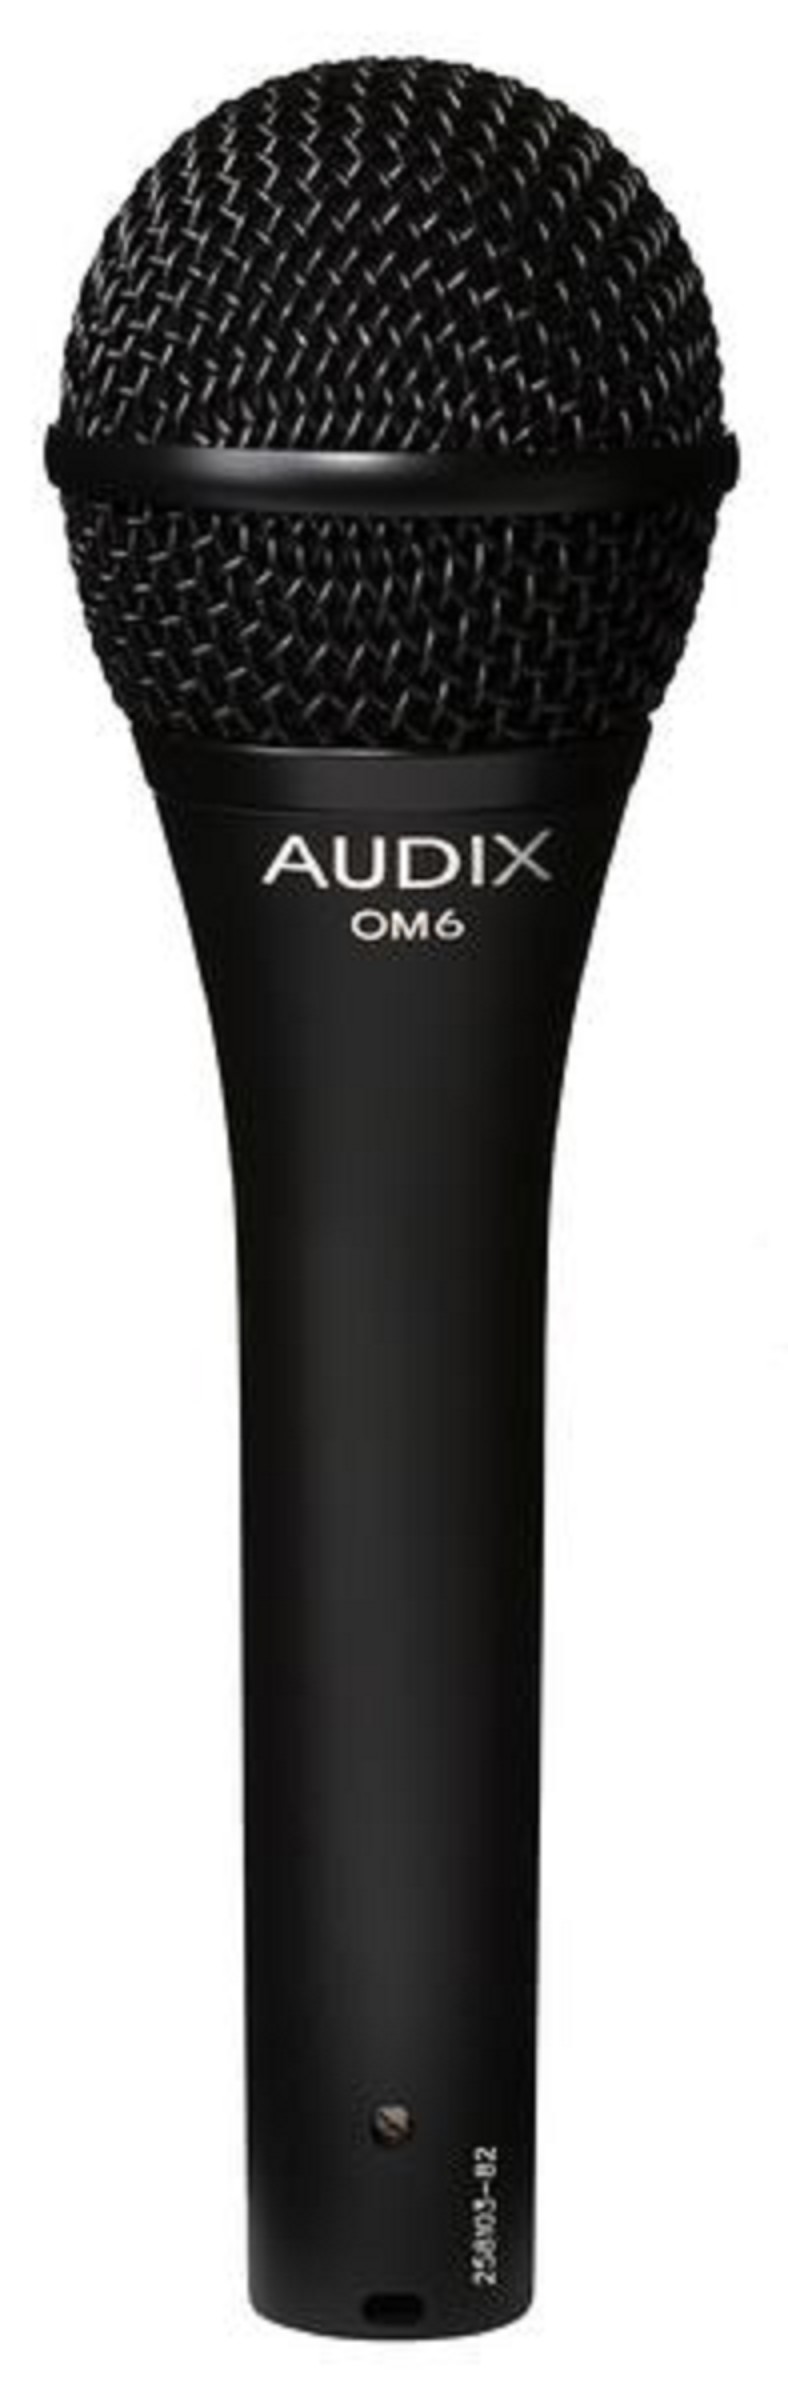 Audix OM6 erstklassiges dyn.Gesangsmikrofon